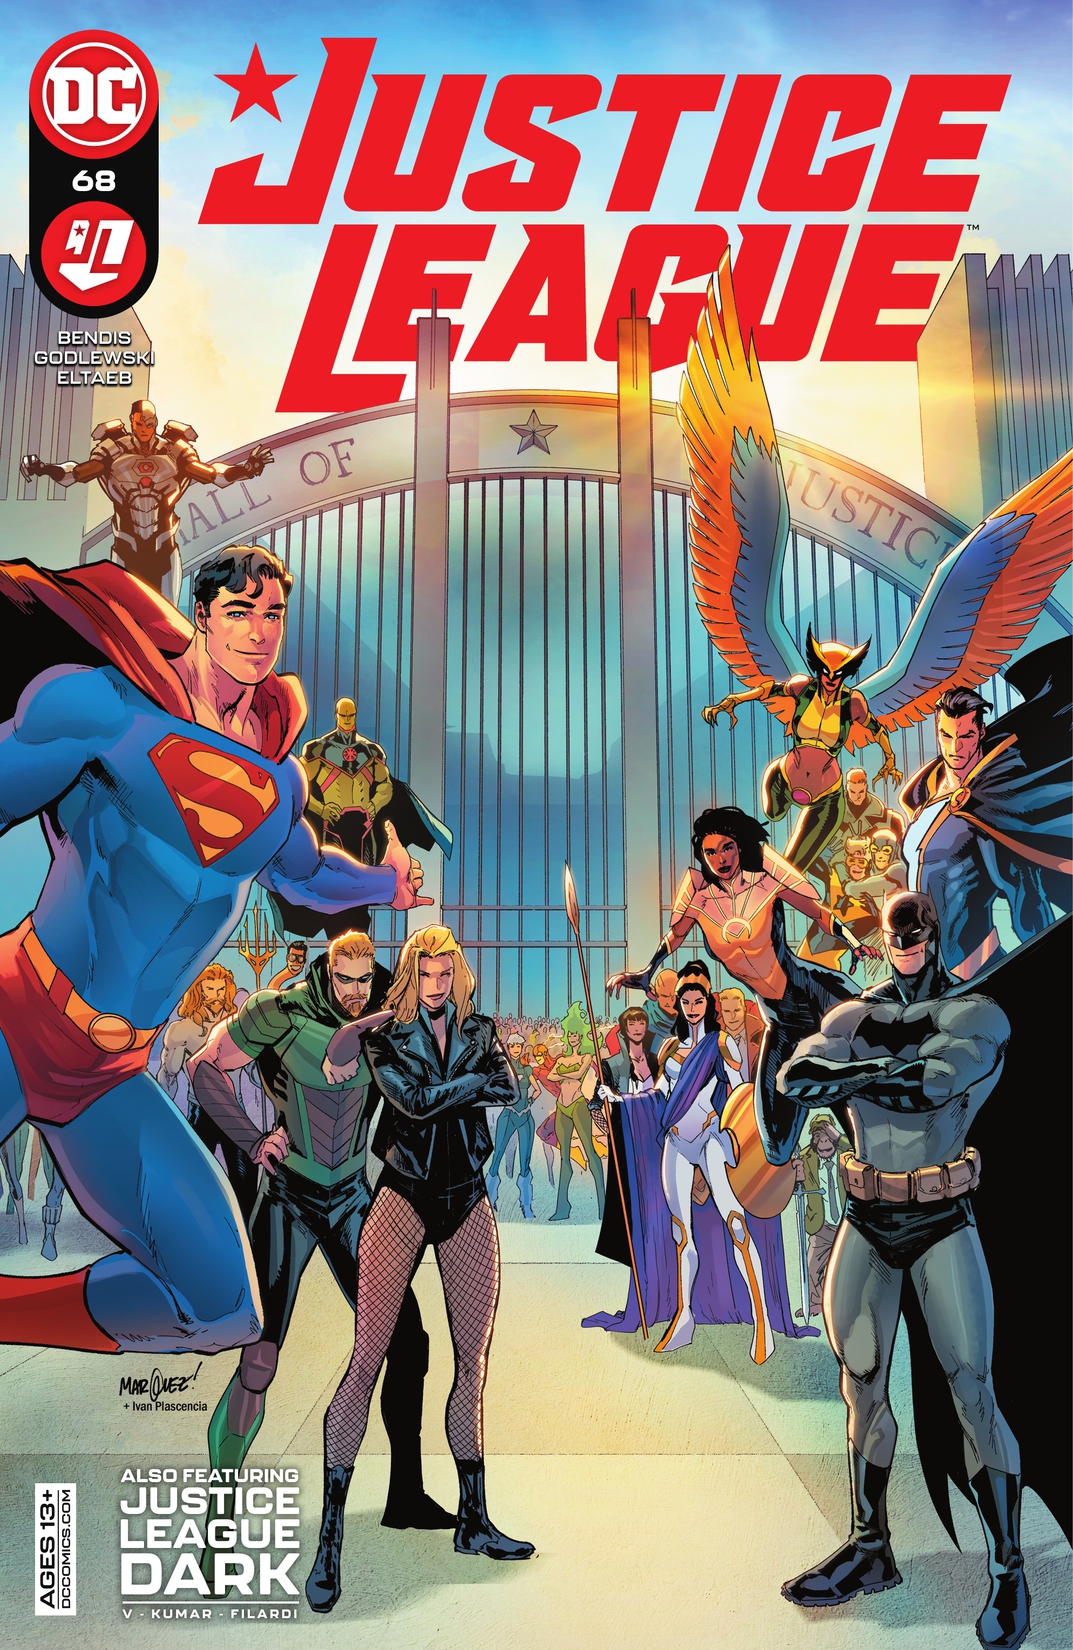 Justice League (2018-) #68 preview images